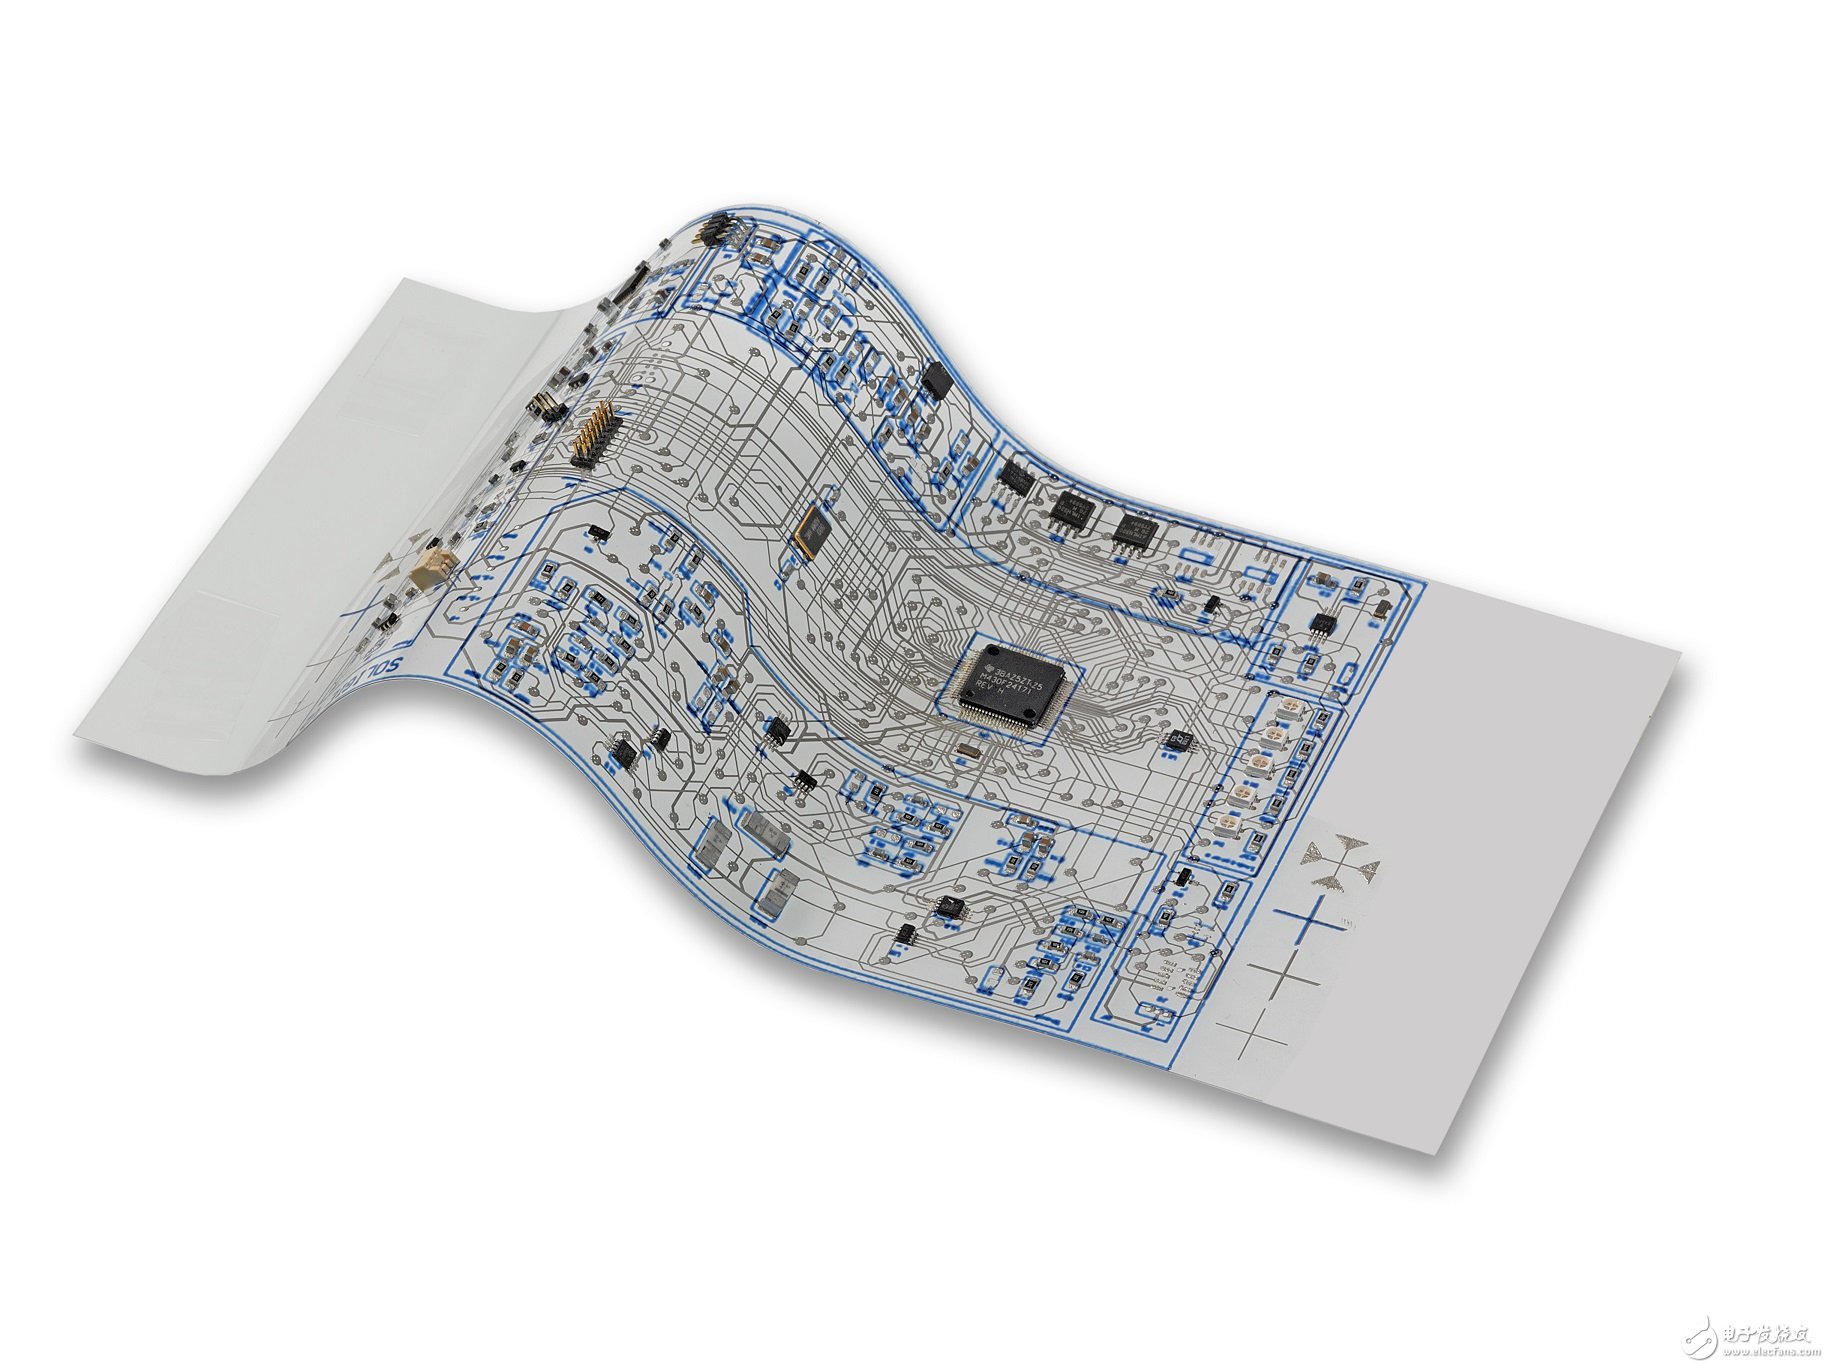 Molex定制 Soligie 柔性印刷型传感器解决方案